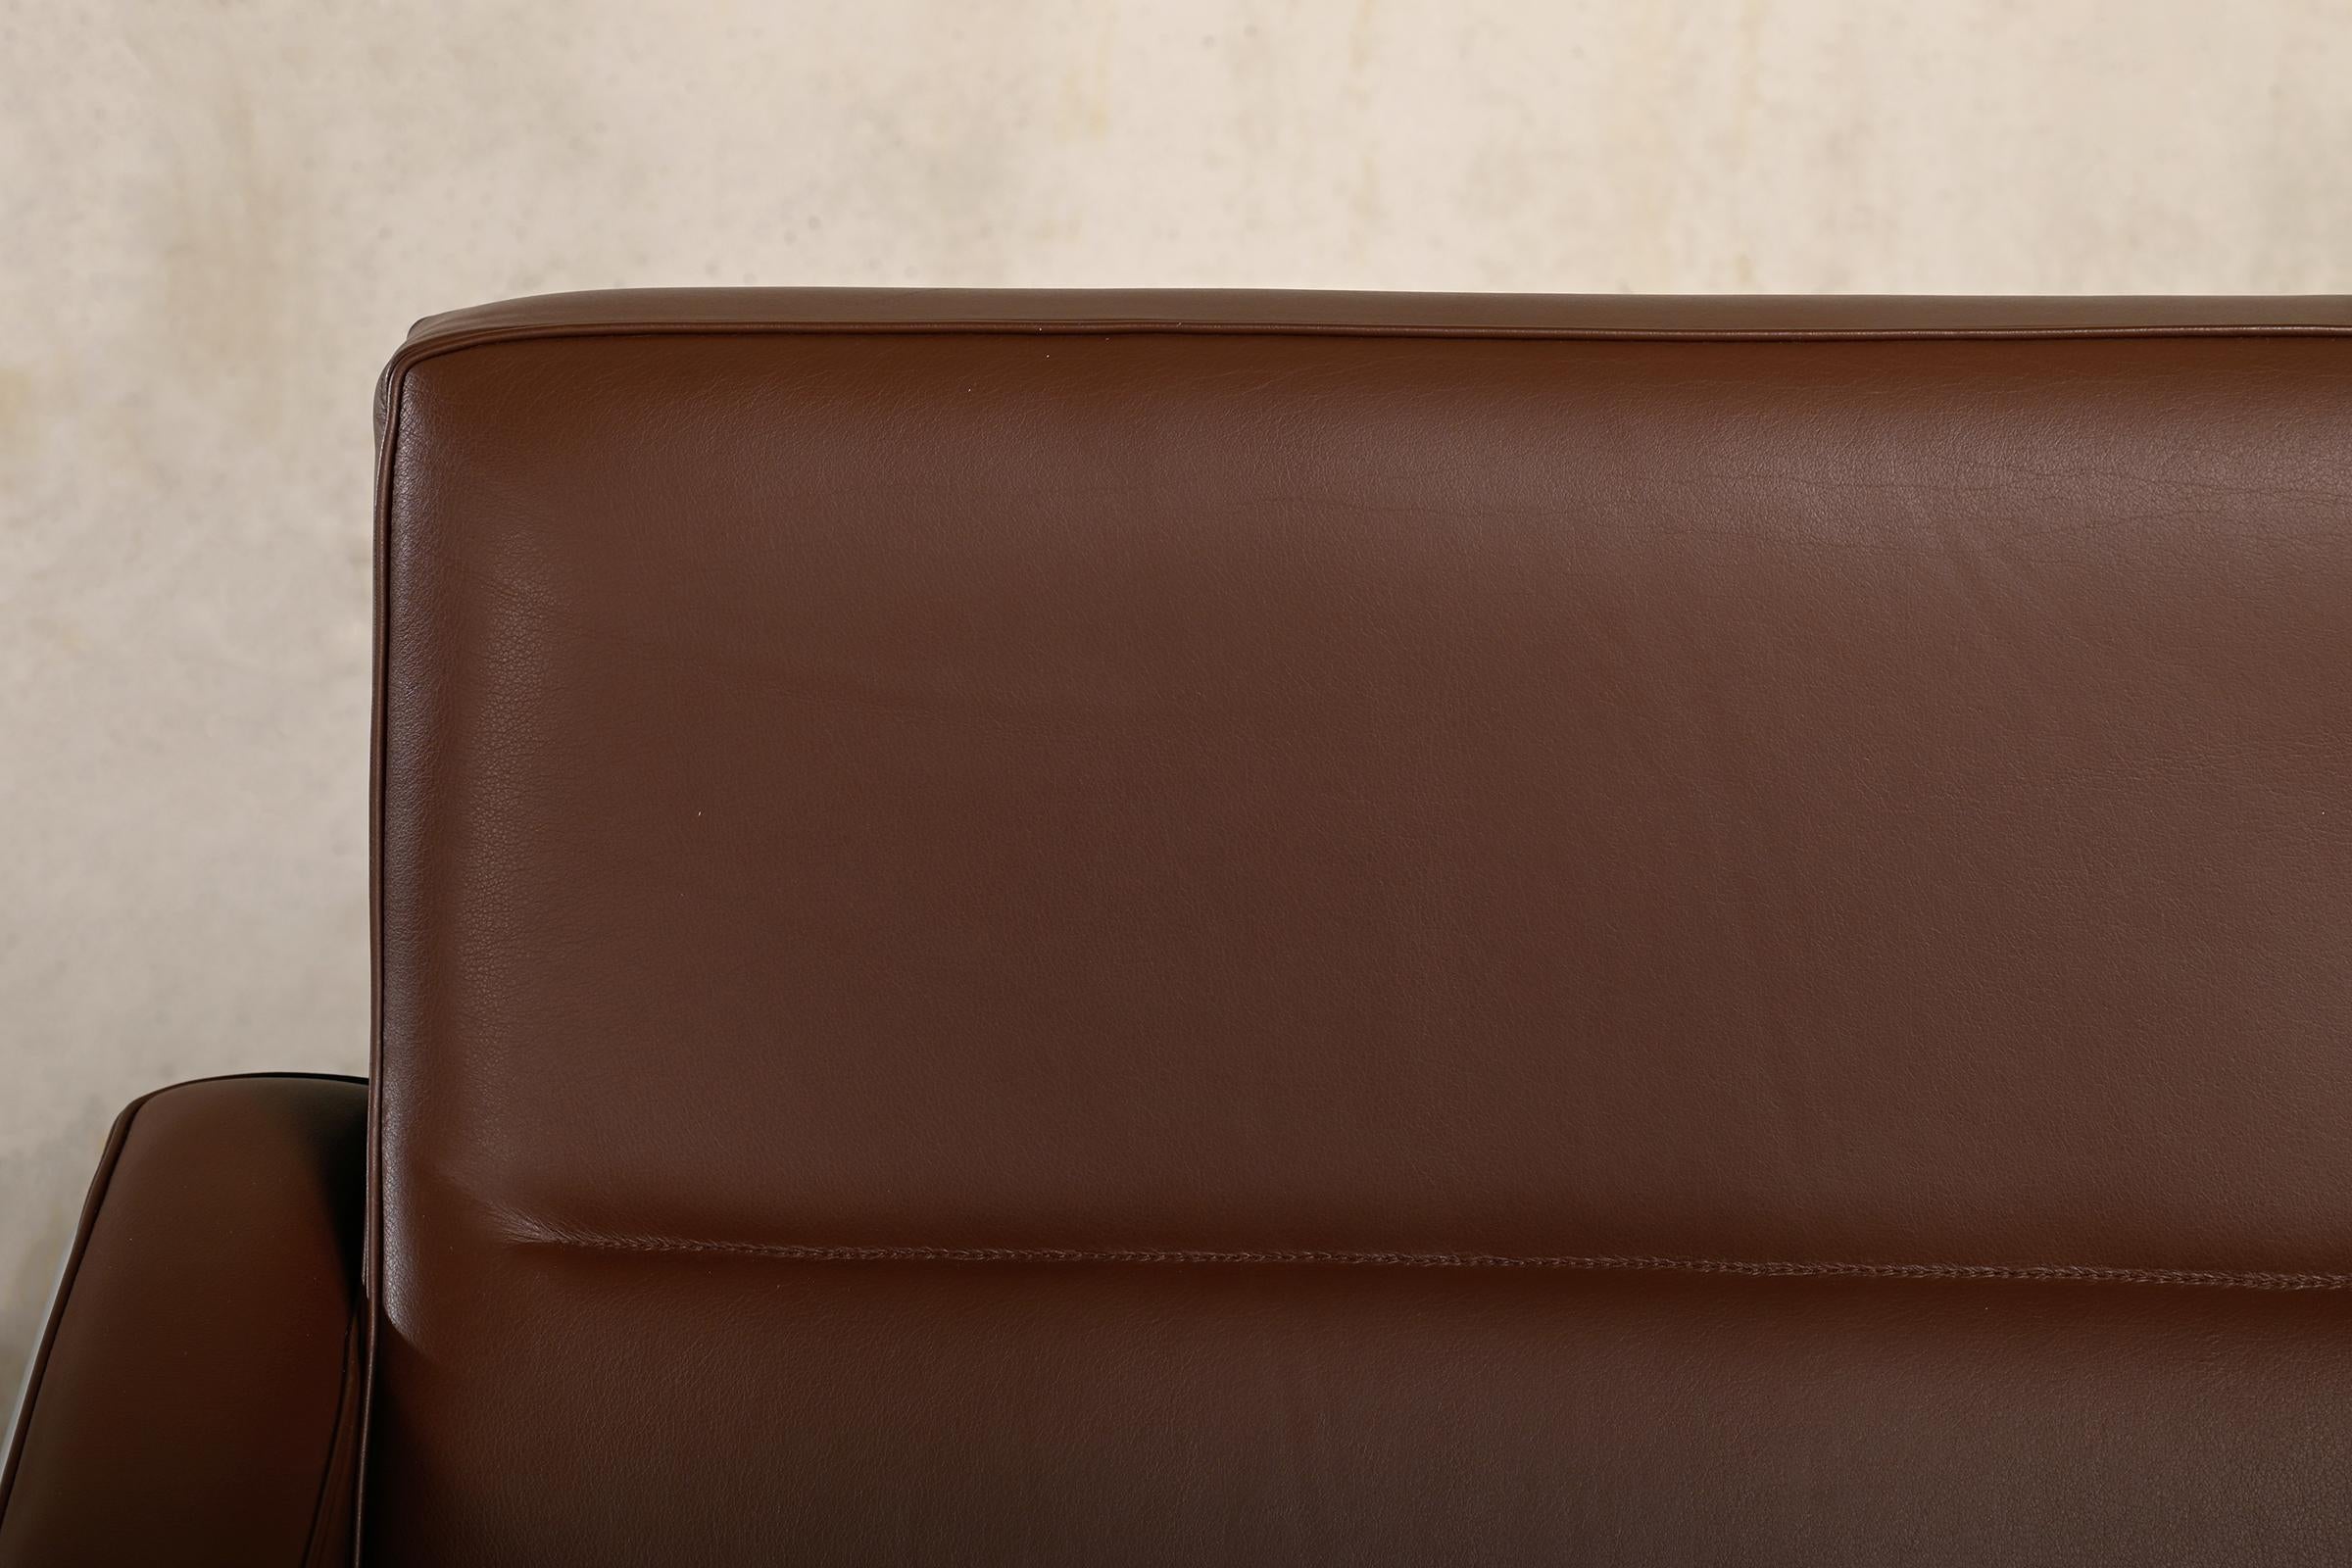 Arne Jacobsen Lounge Chair 3300 Series in Chestnut leather for Fritz Hansen For Sale 2